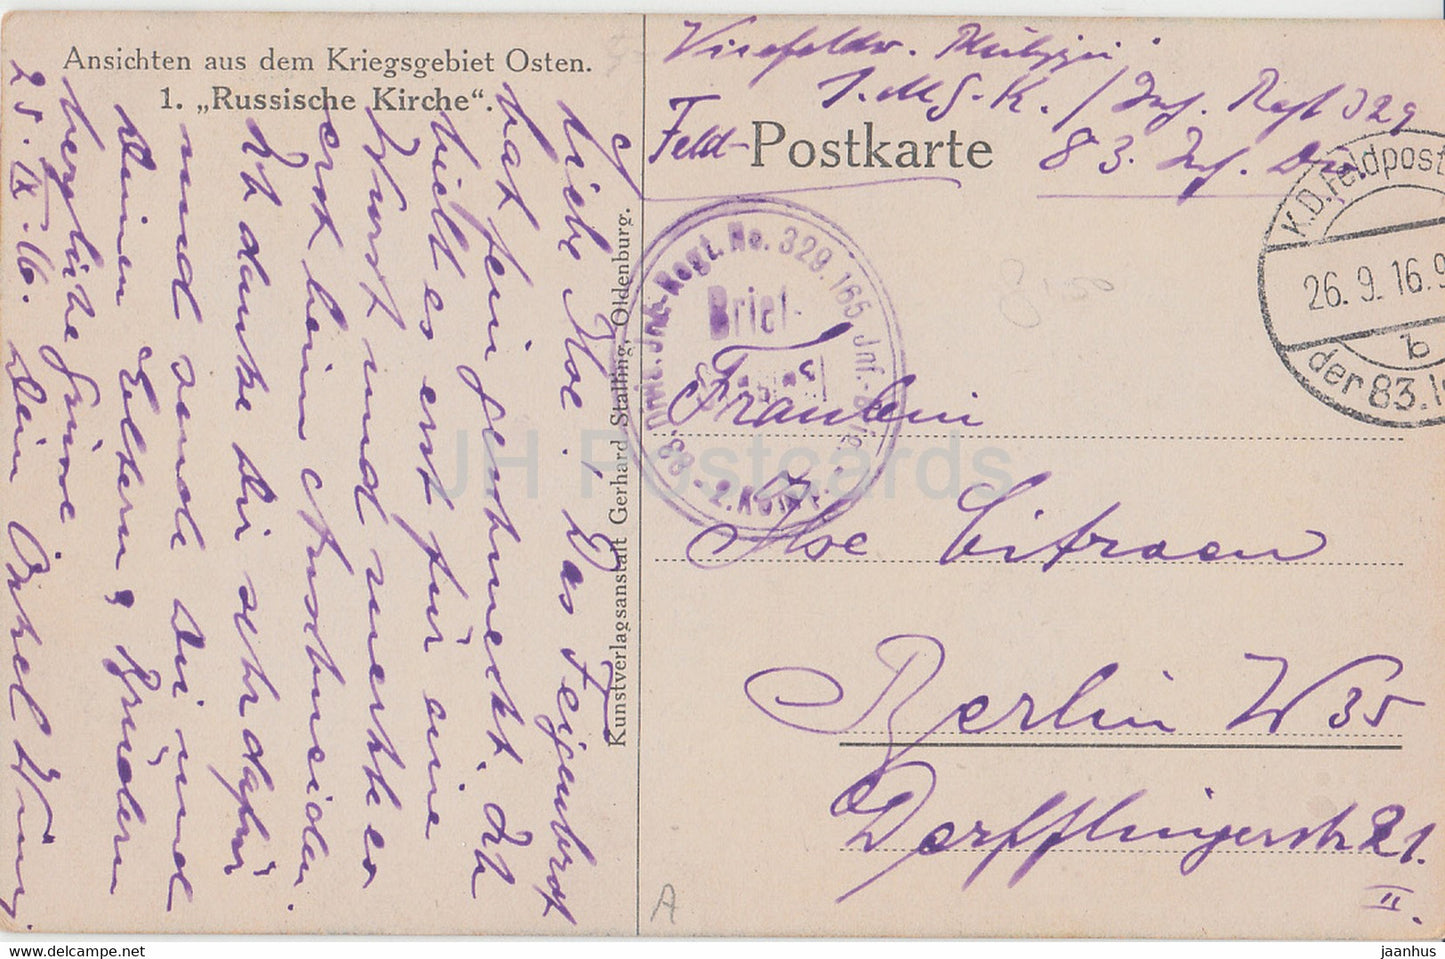 Ansichten aus dem Kriegsgebiet Osten - Russische Kirche - church - Feldpost - old postcard - 1916 - Russia - used